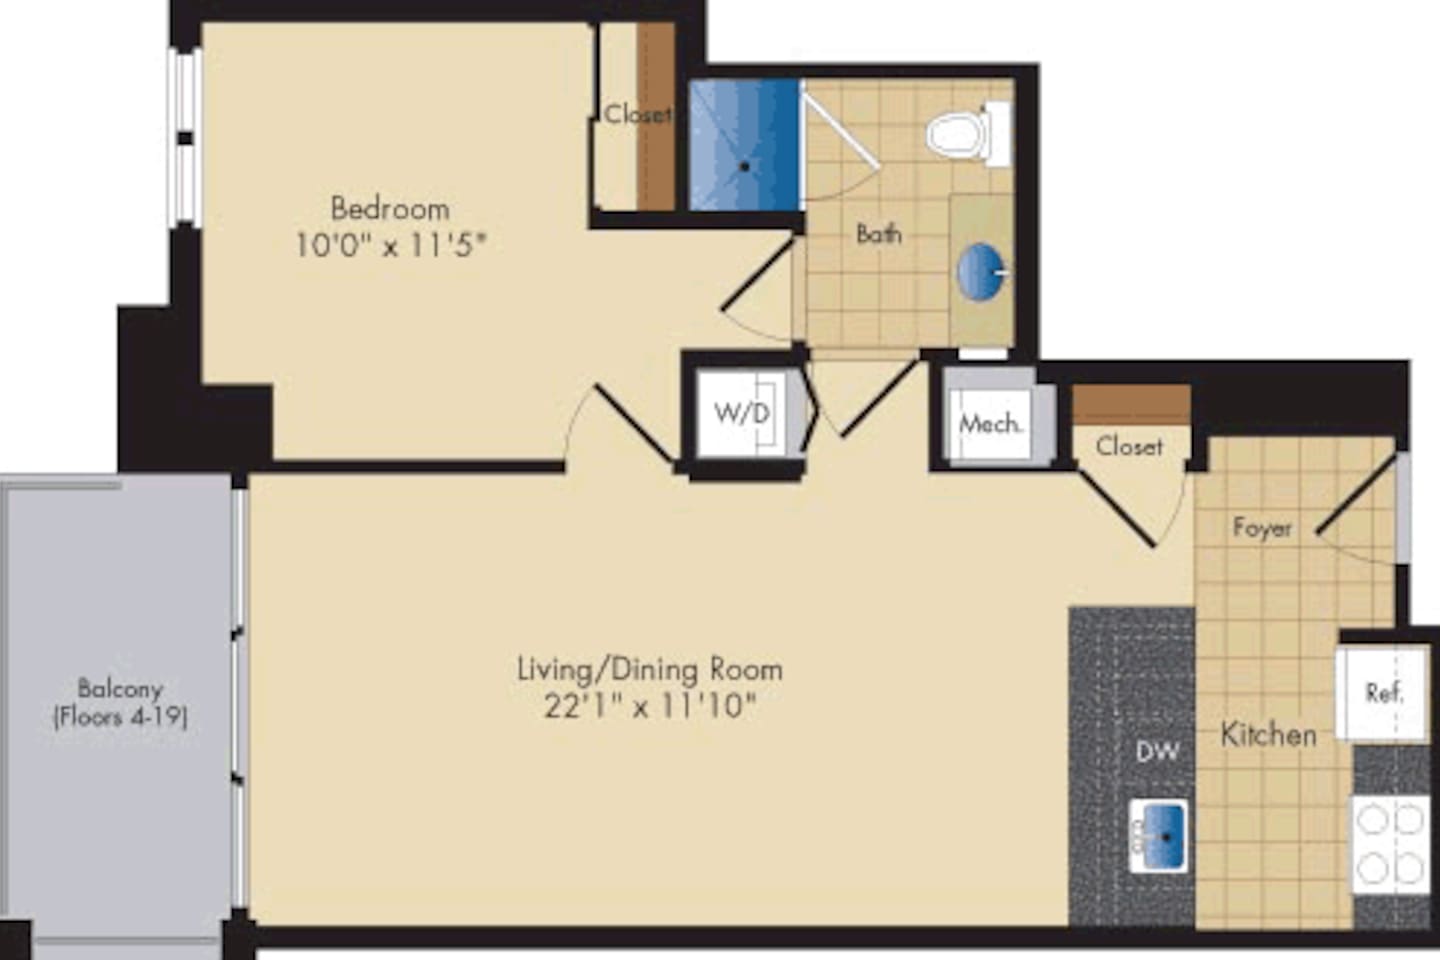 Floorplan diagram for Pollard, showing 1 bedroom